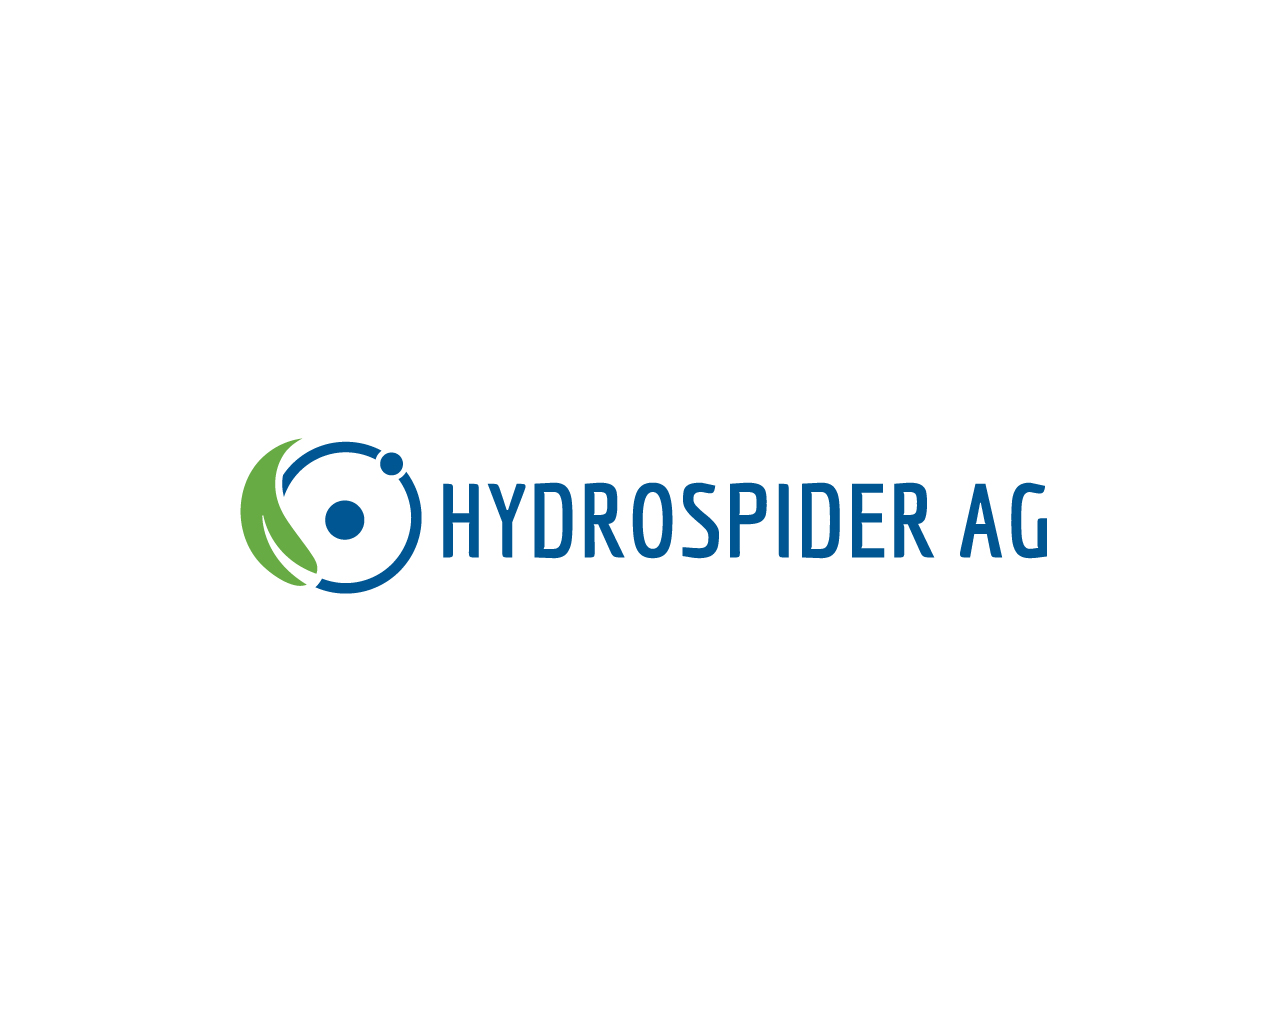 Hydrospider